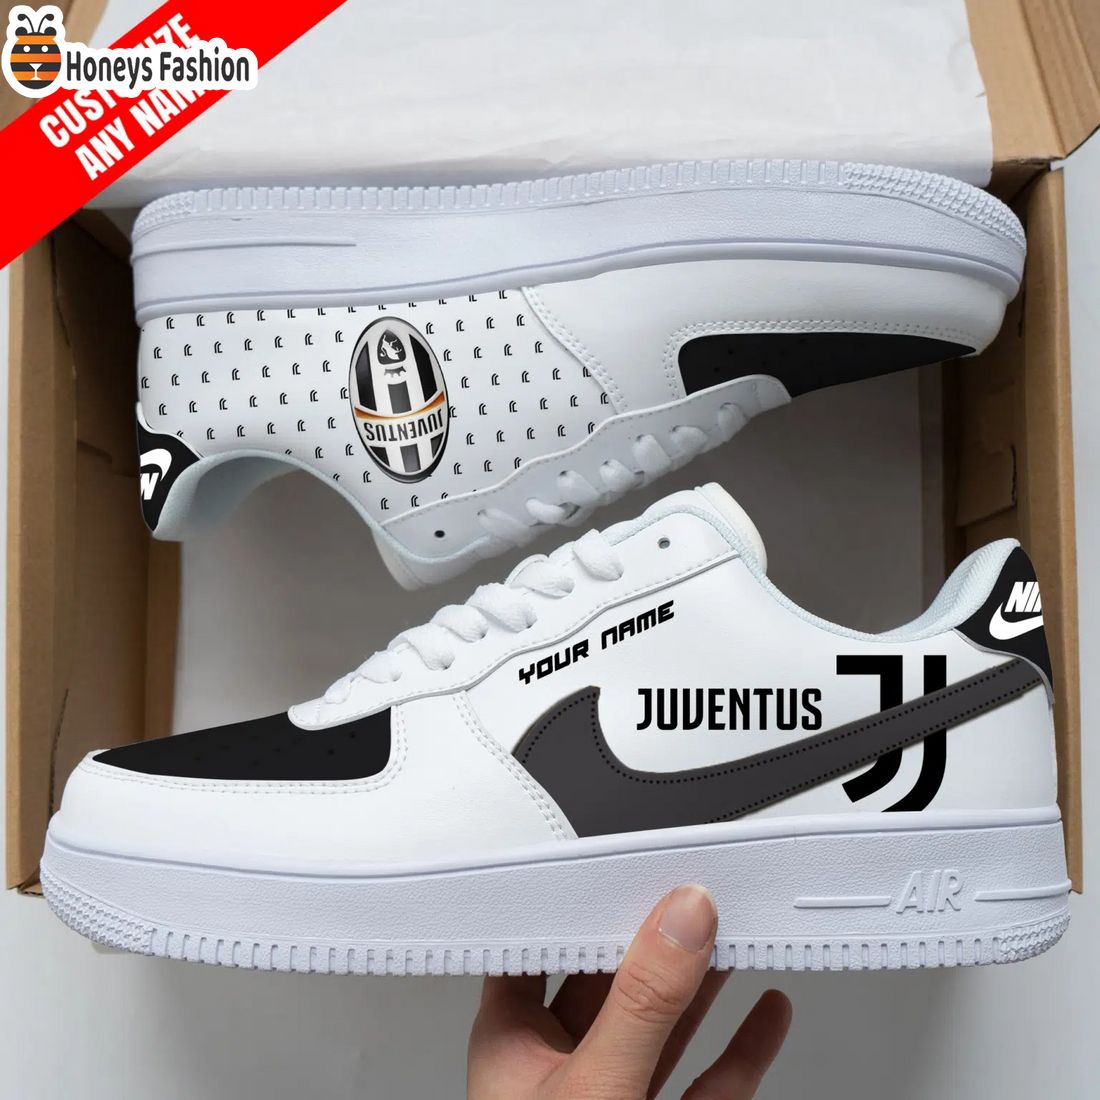 Juventus Personalized Nike Air Force Sneakers